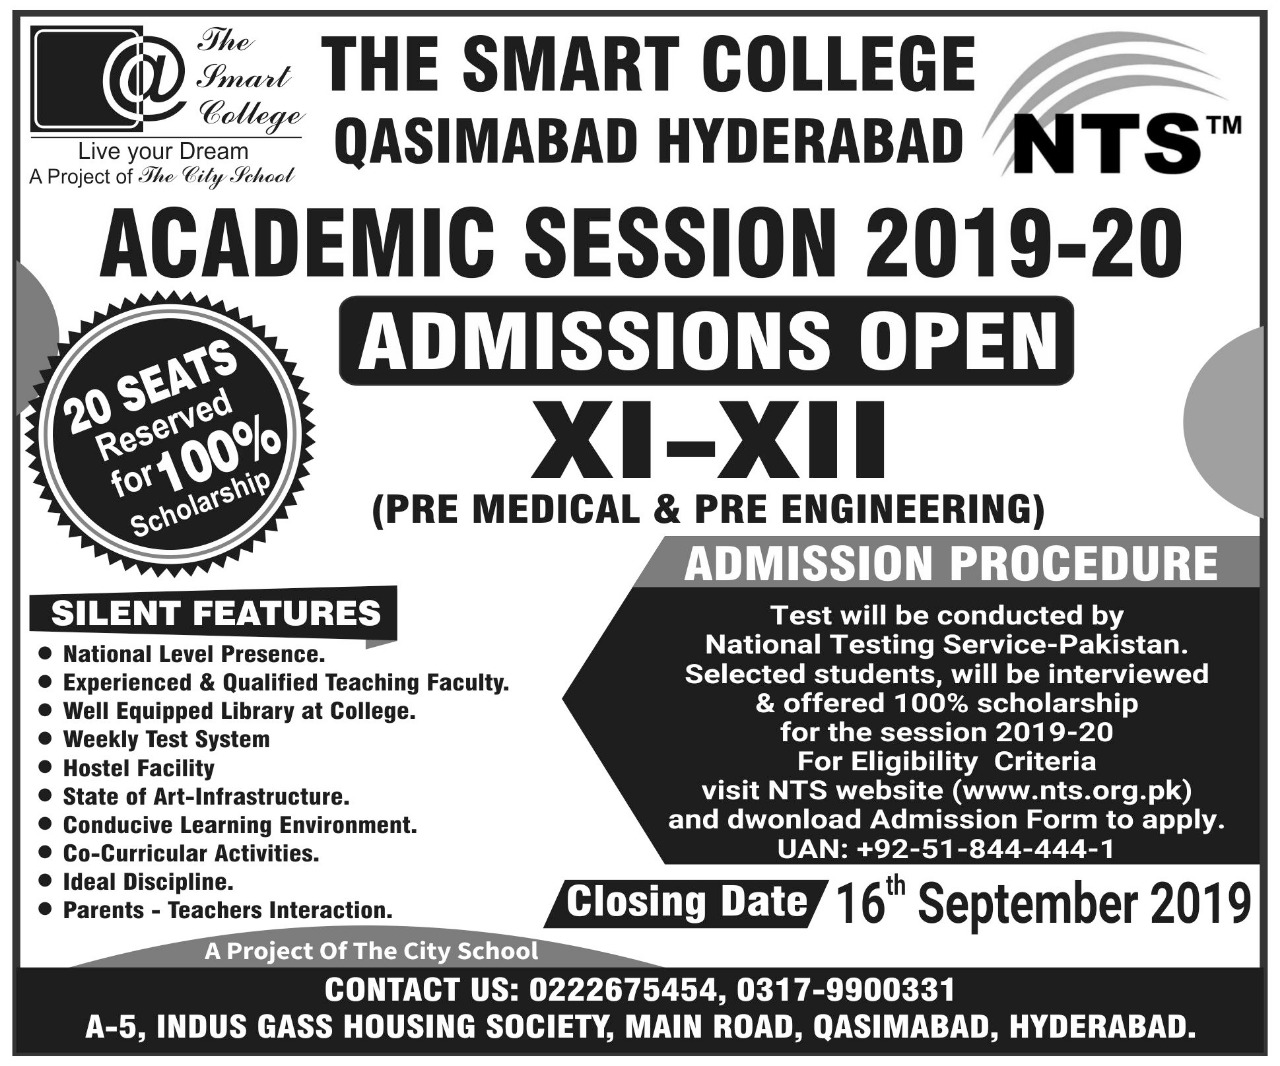 The Smart College Qasimabad Hyderabad Admissions Program 2019